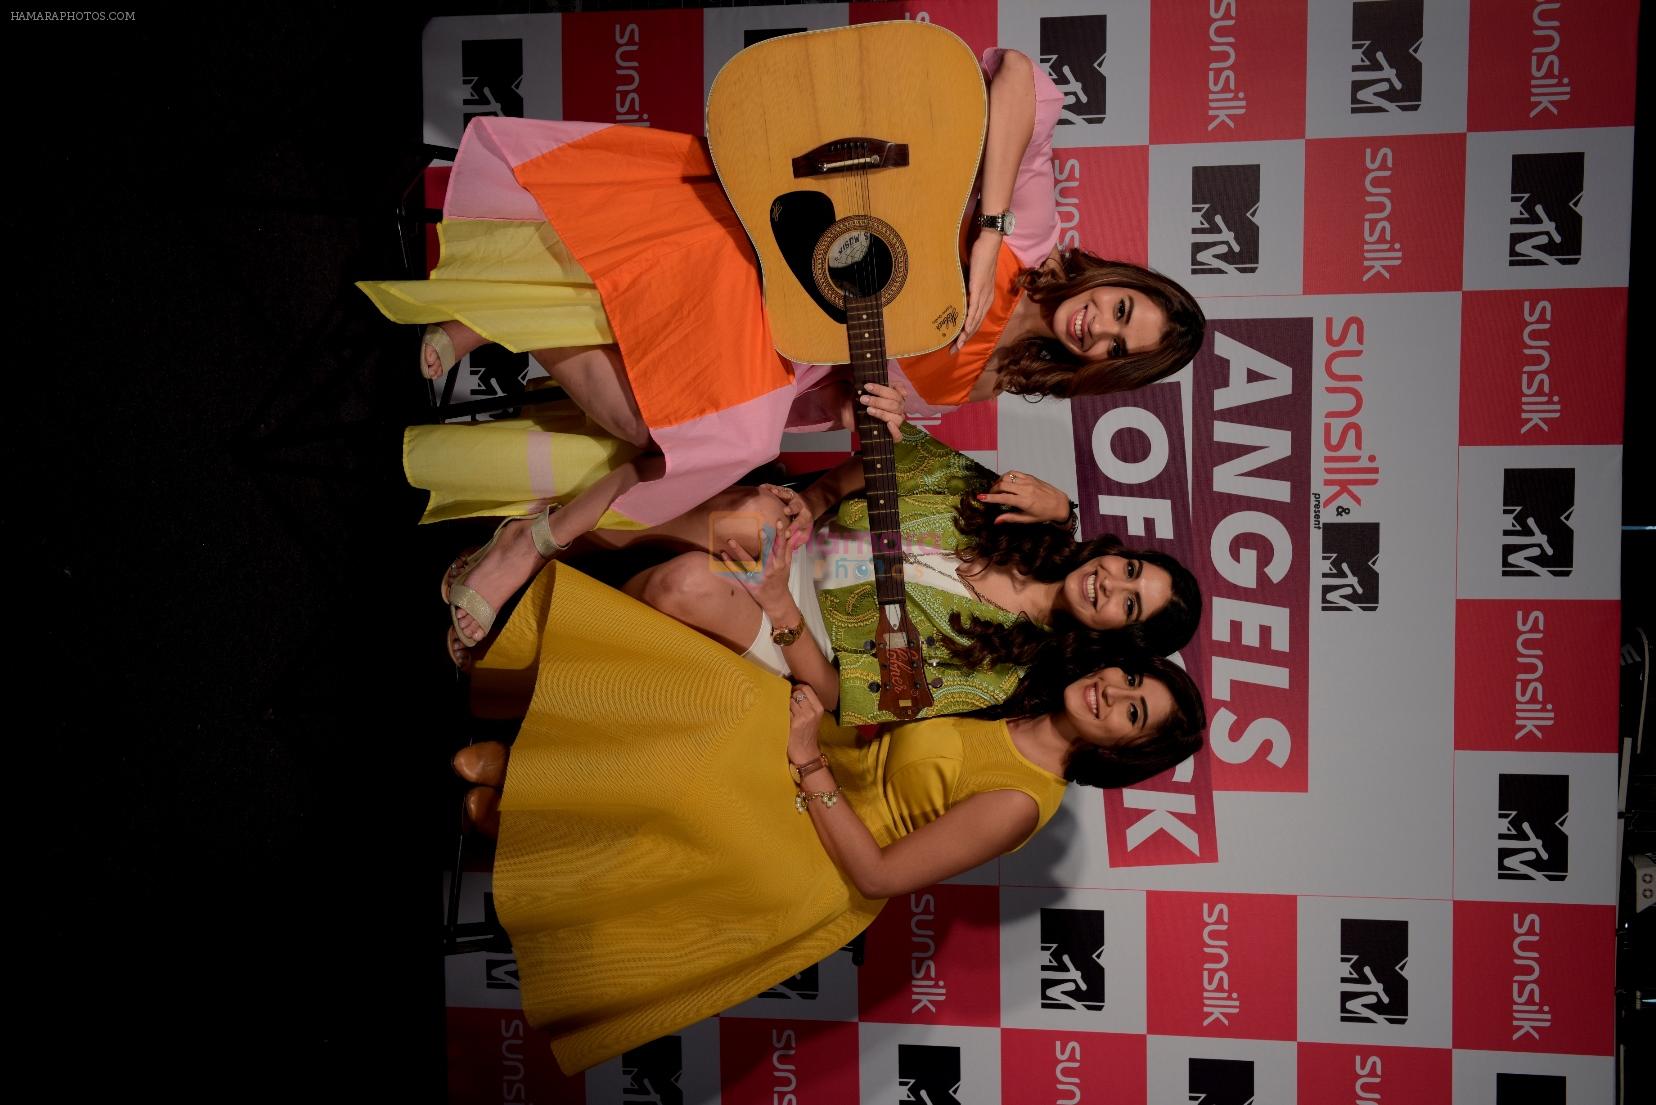 Sunsilk & MTV present Angels of Rock - Angels Shalmali Kholgade, Anusha Mani and Akasa Singh